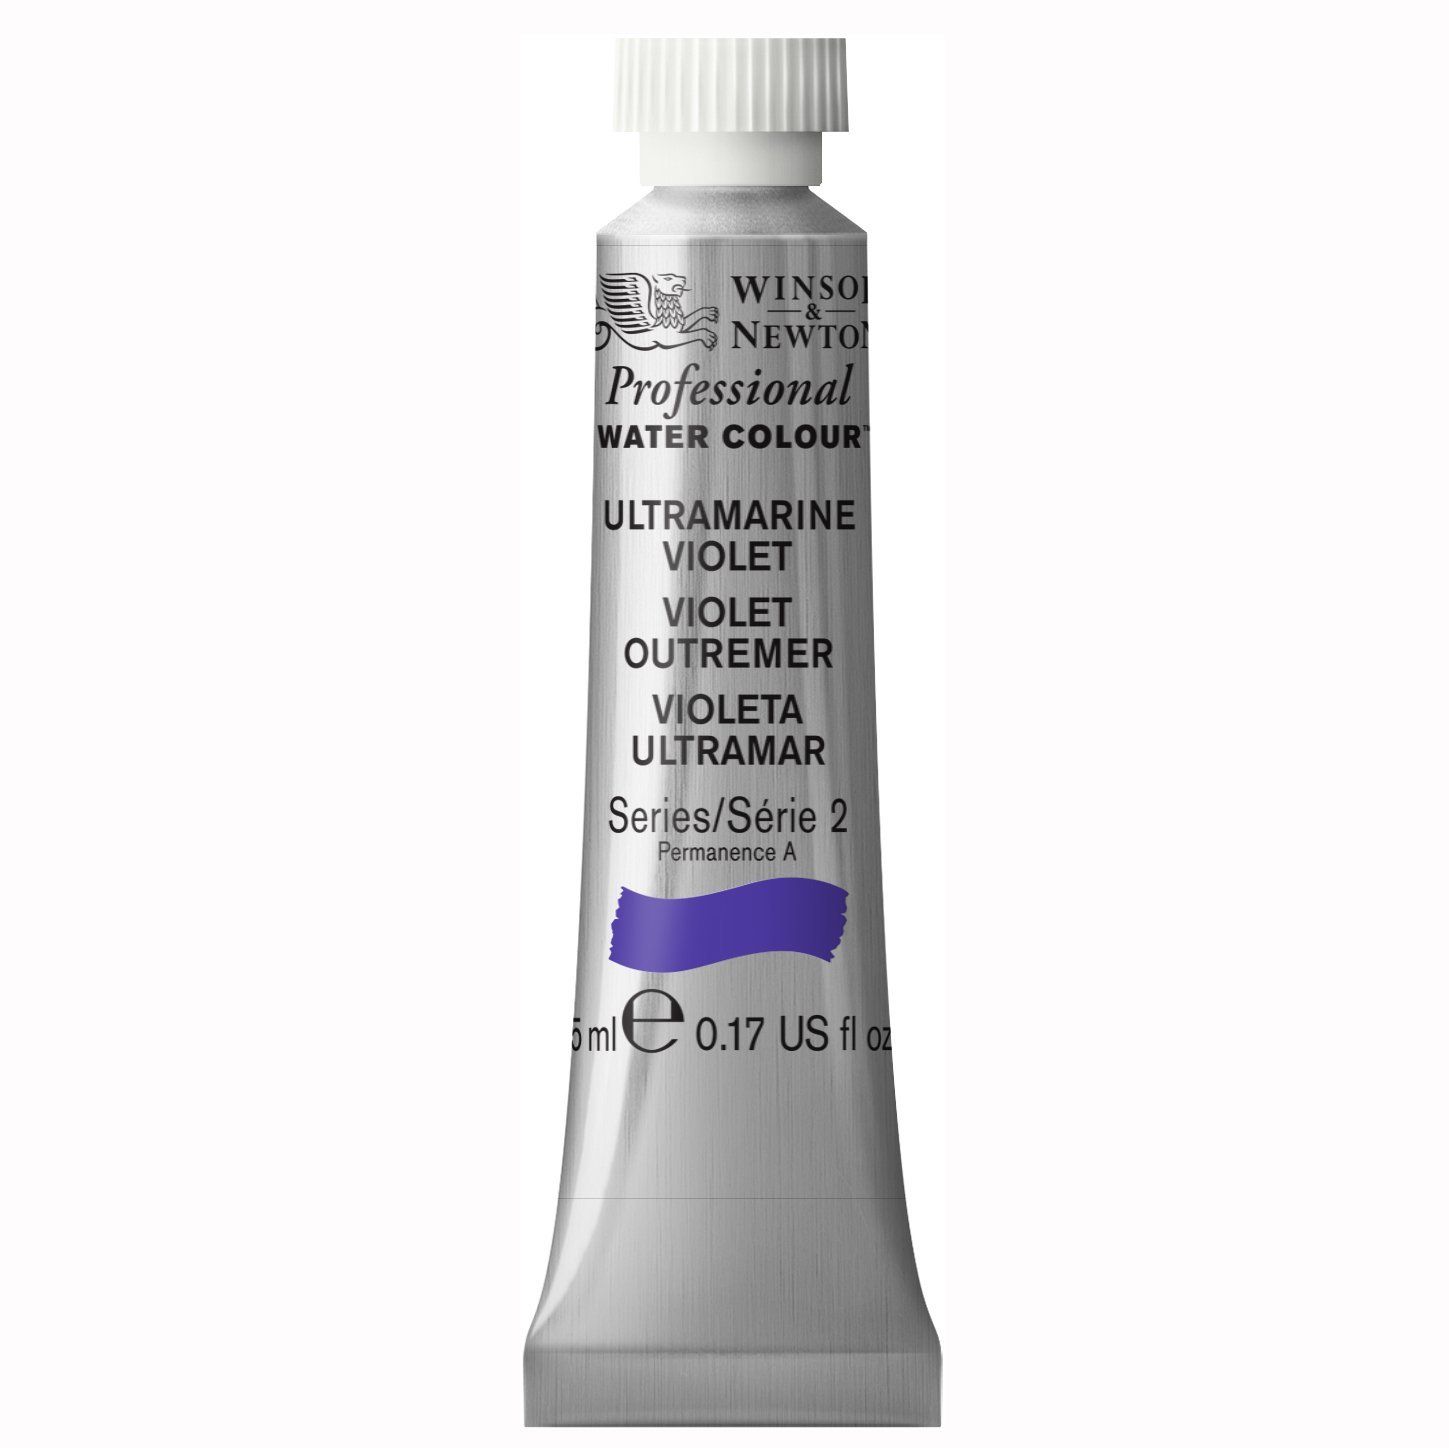 Winsor & Newton Watercolour Paint - Ultramarine Violet 5ml